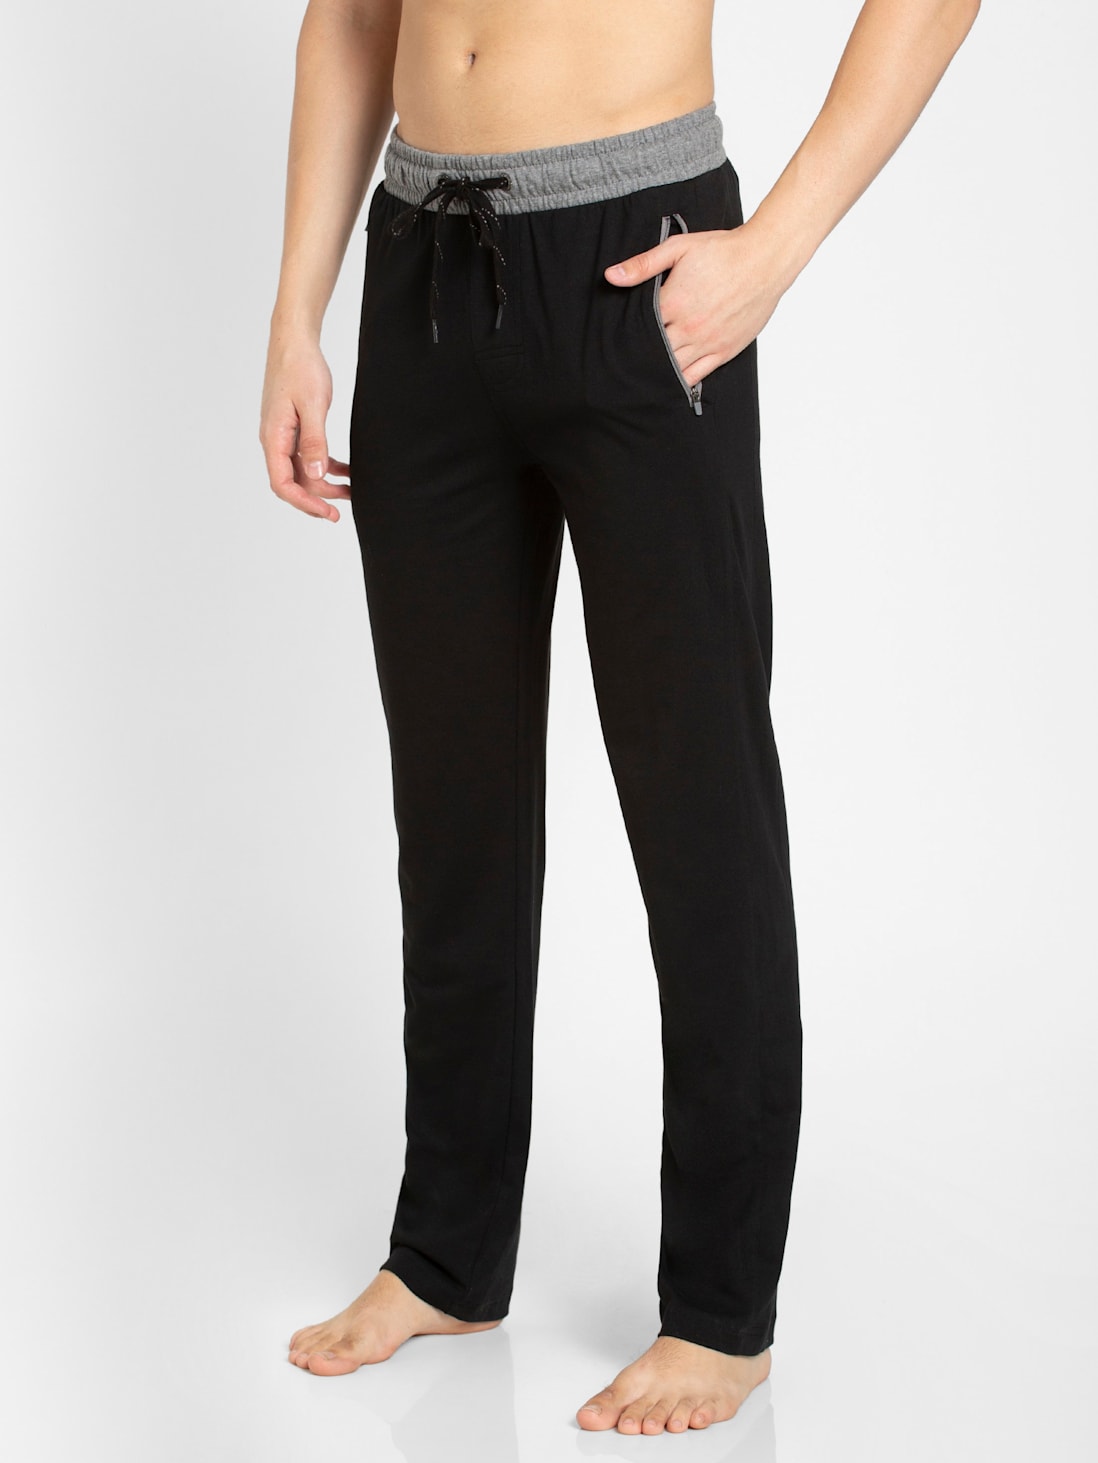 Jockey Women's Nylon Poly Spandex Stretch Gray Striped Active Wear Pants  Size S on eBid New Zealand | 209387448